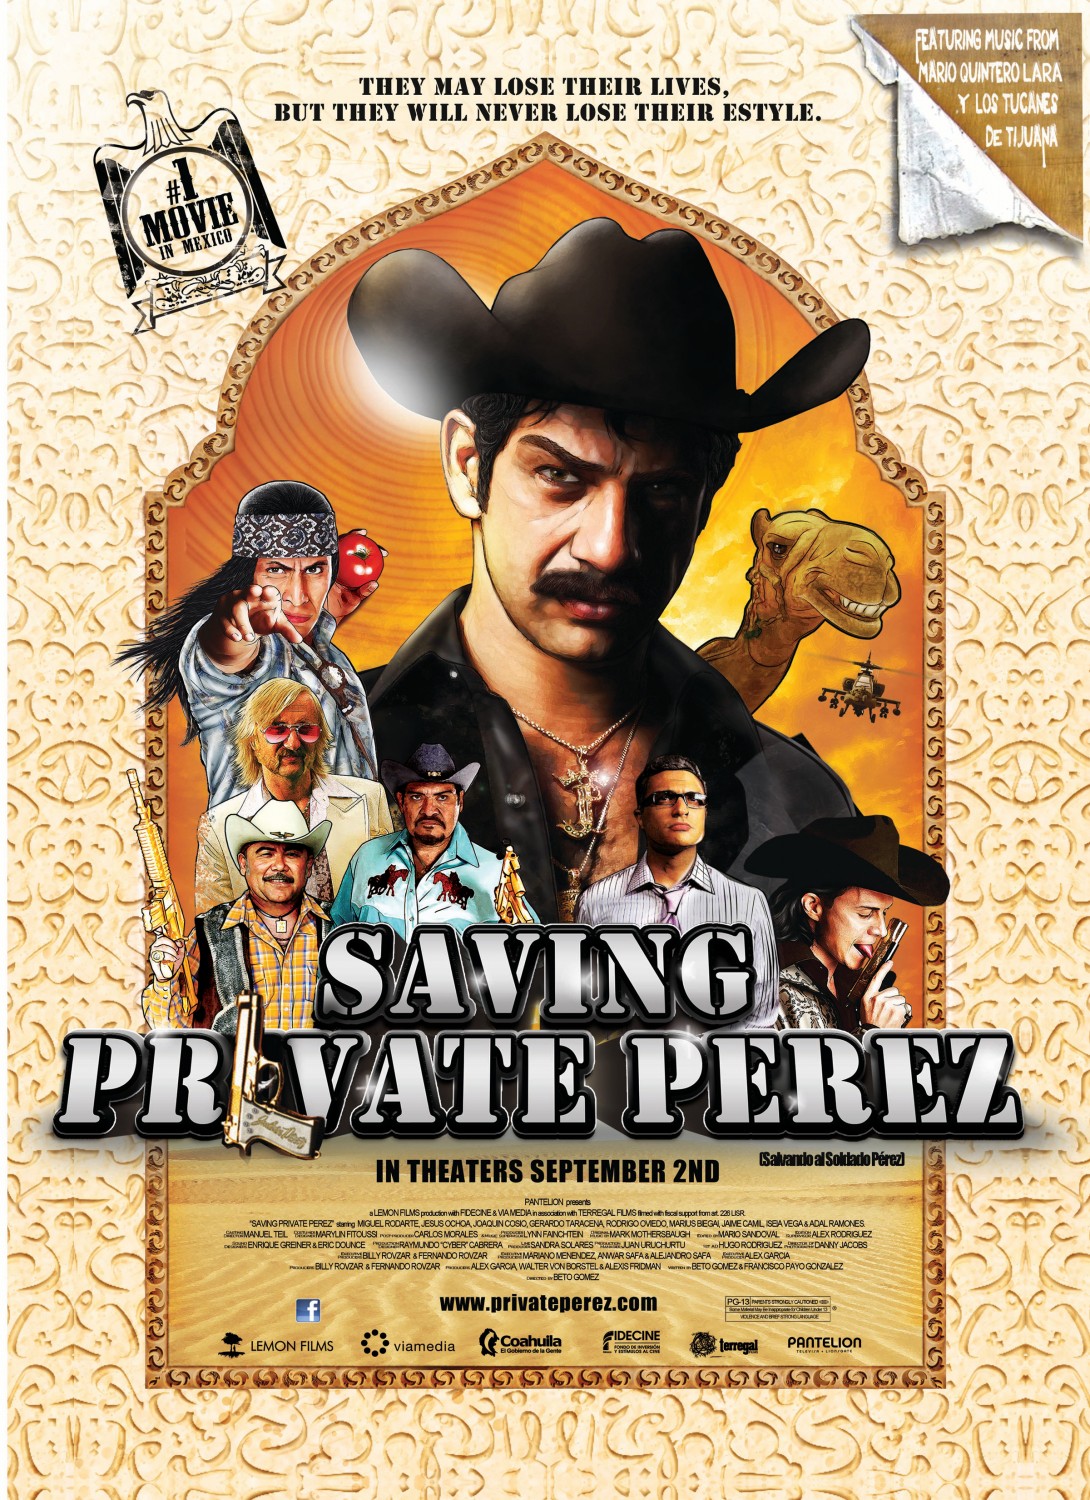 Extra Large Movie Poster Image for Salvando al Soldado Pérez 